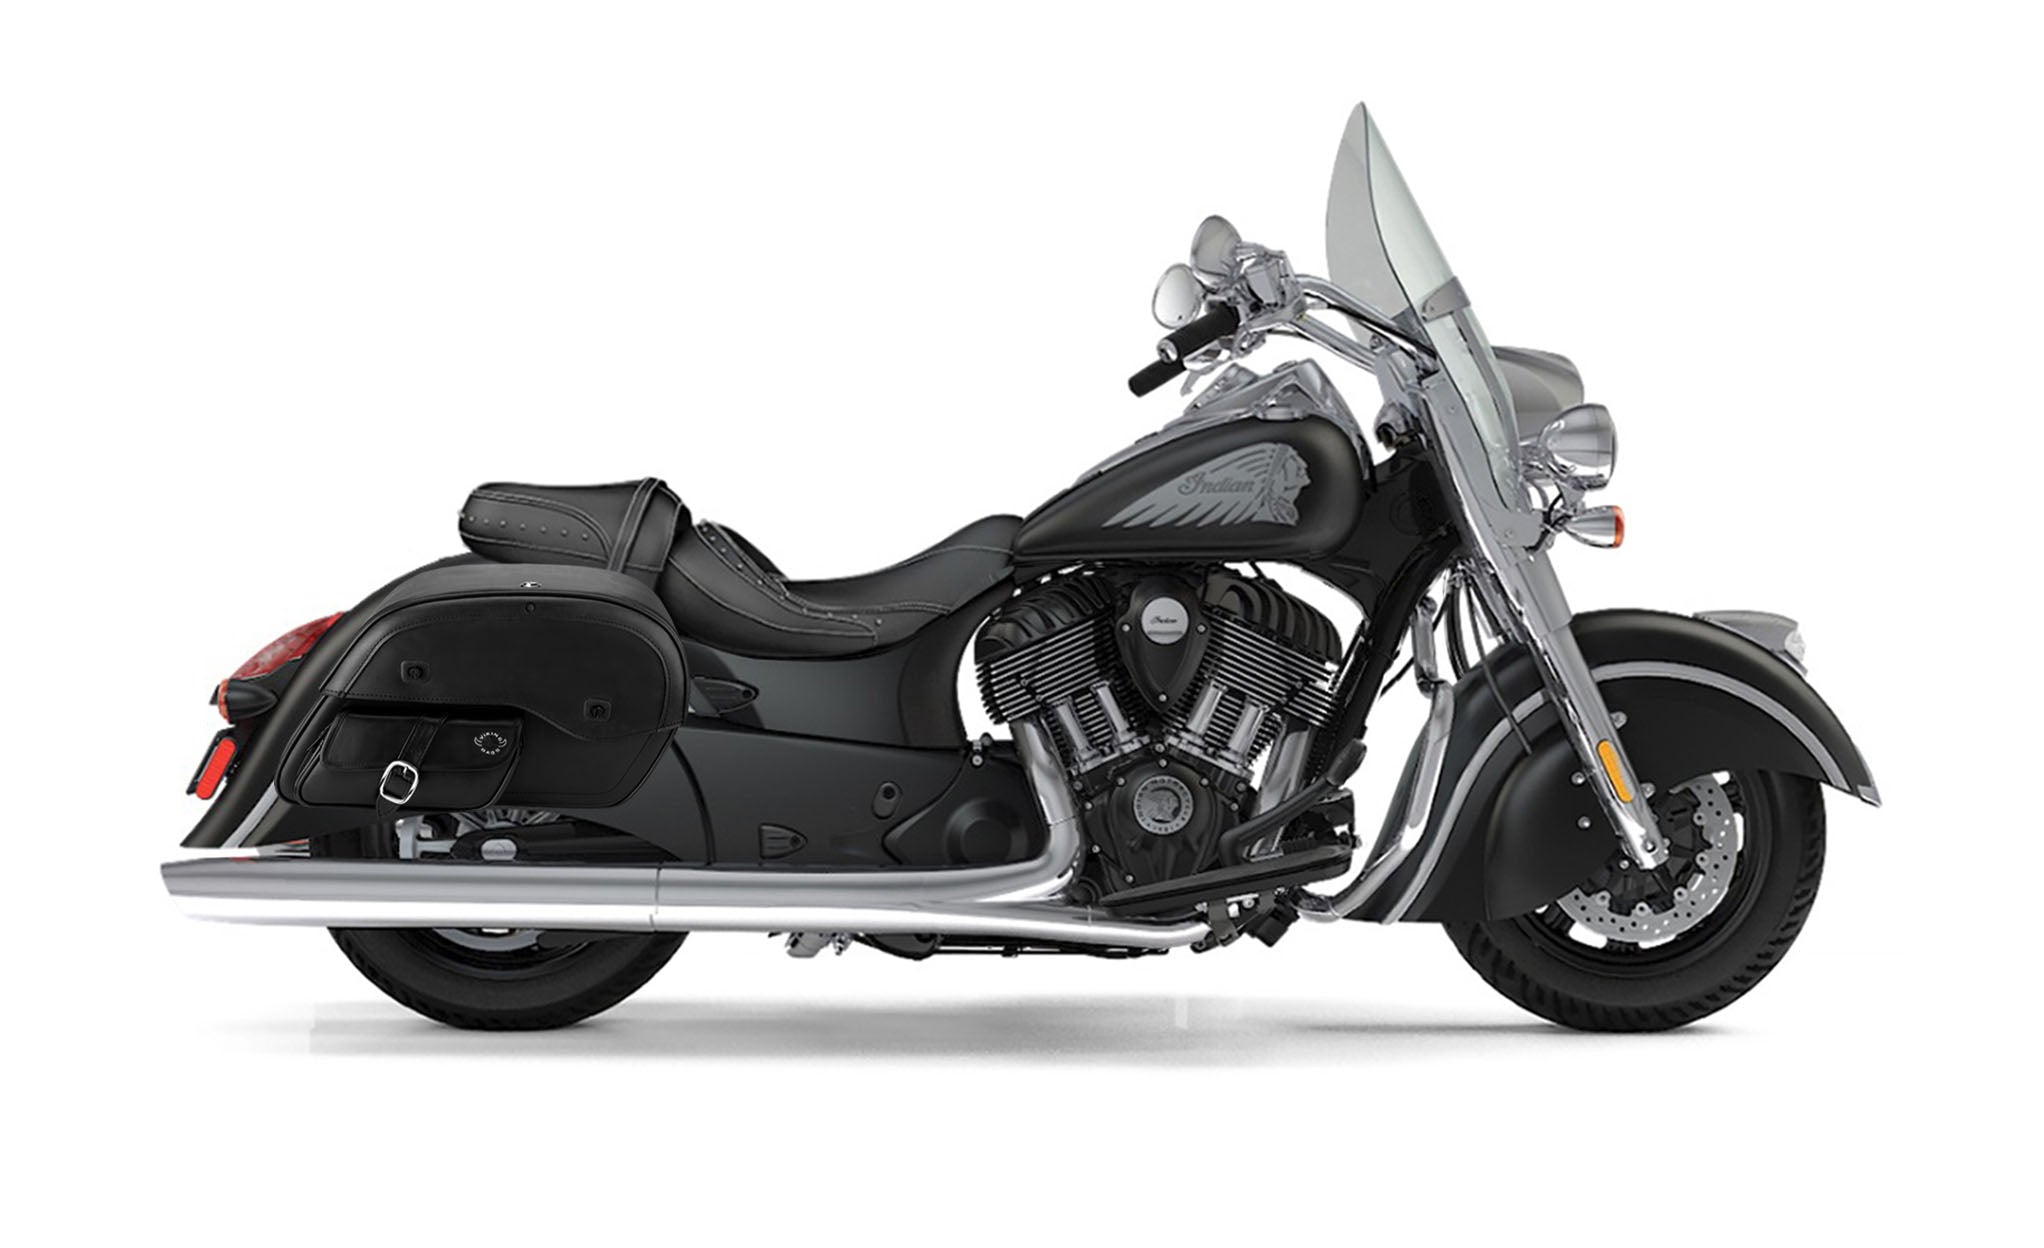 Viking Essential Side Pocket Large Indian Springfield Leather Motorcycle Saddlebags on Bike Photo @expand